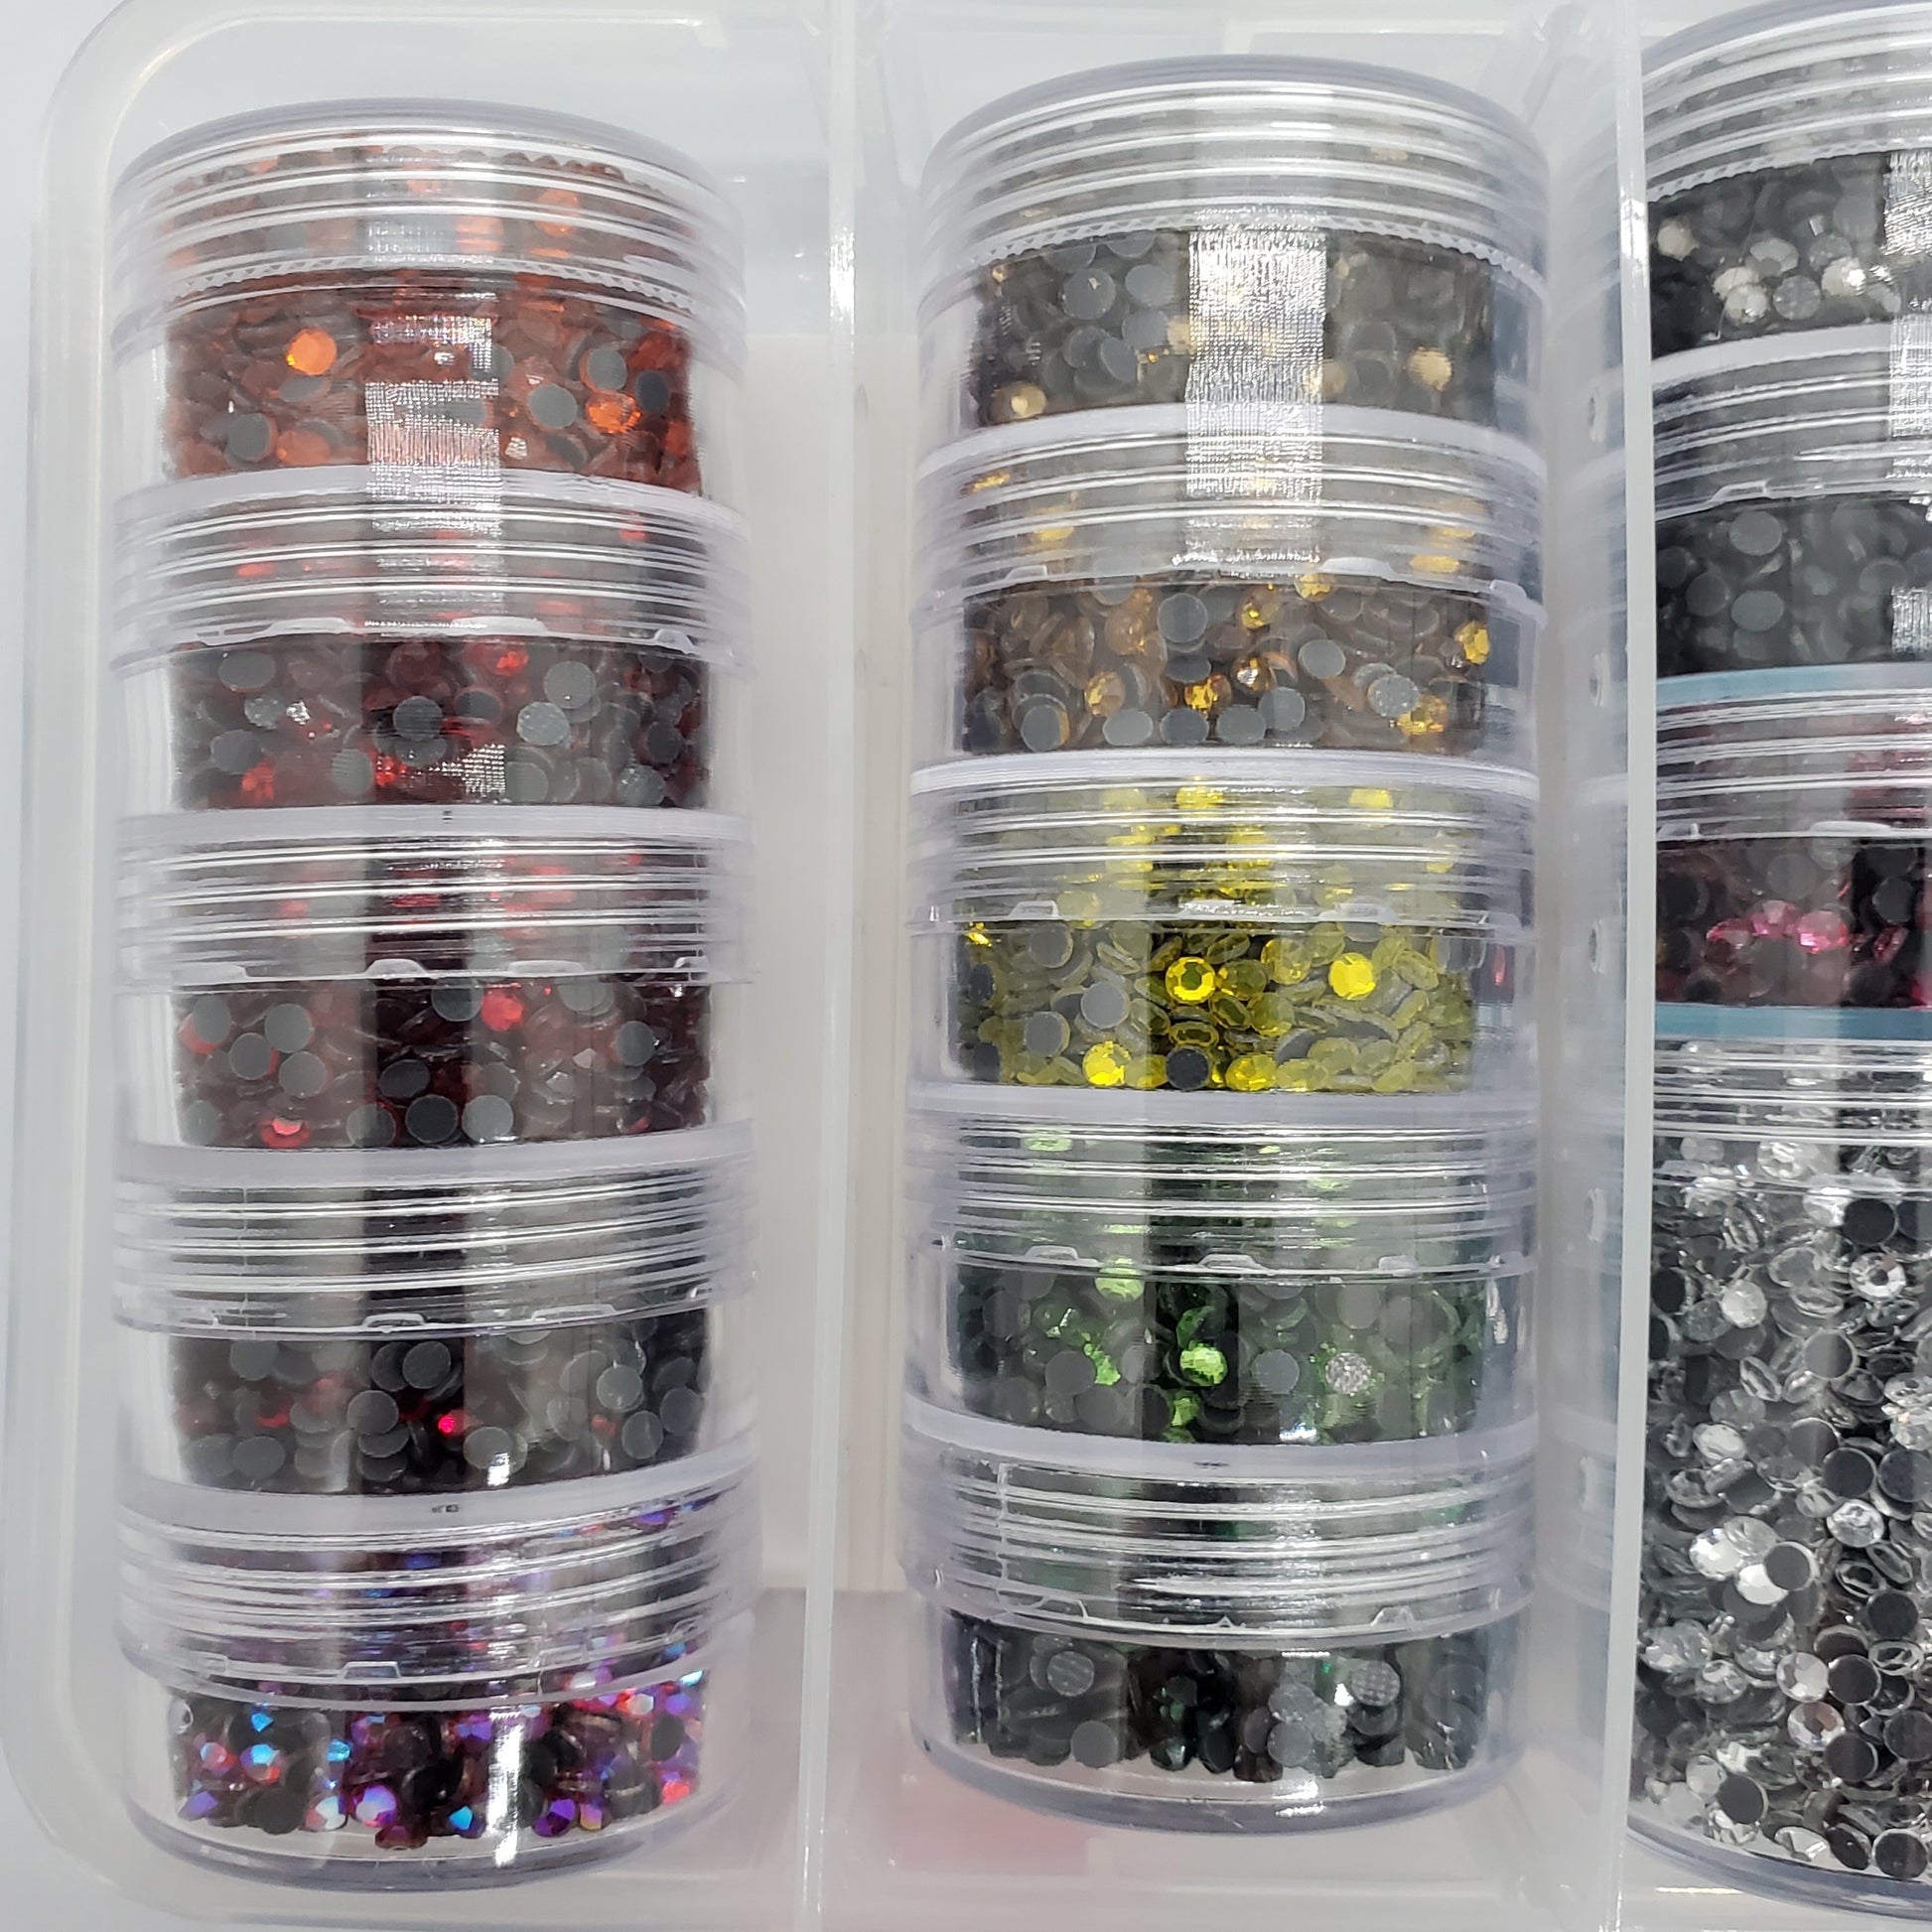 DMC Hotfix Sample Color Starter Kit - Be Createful, Beautiful Rhinestones at wholesale prices.